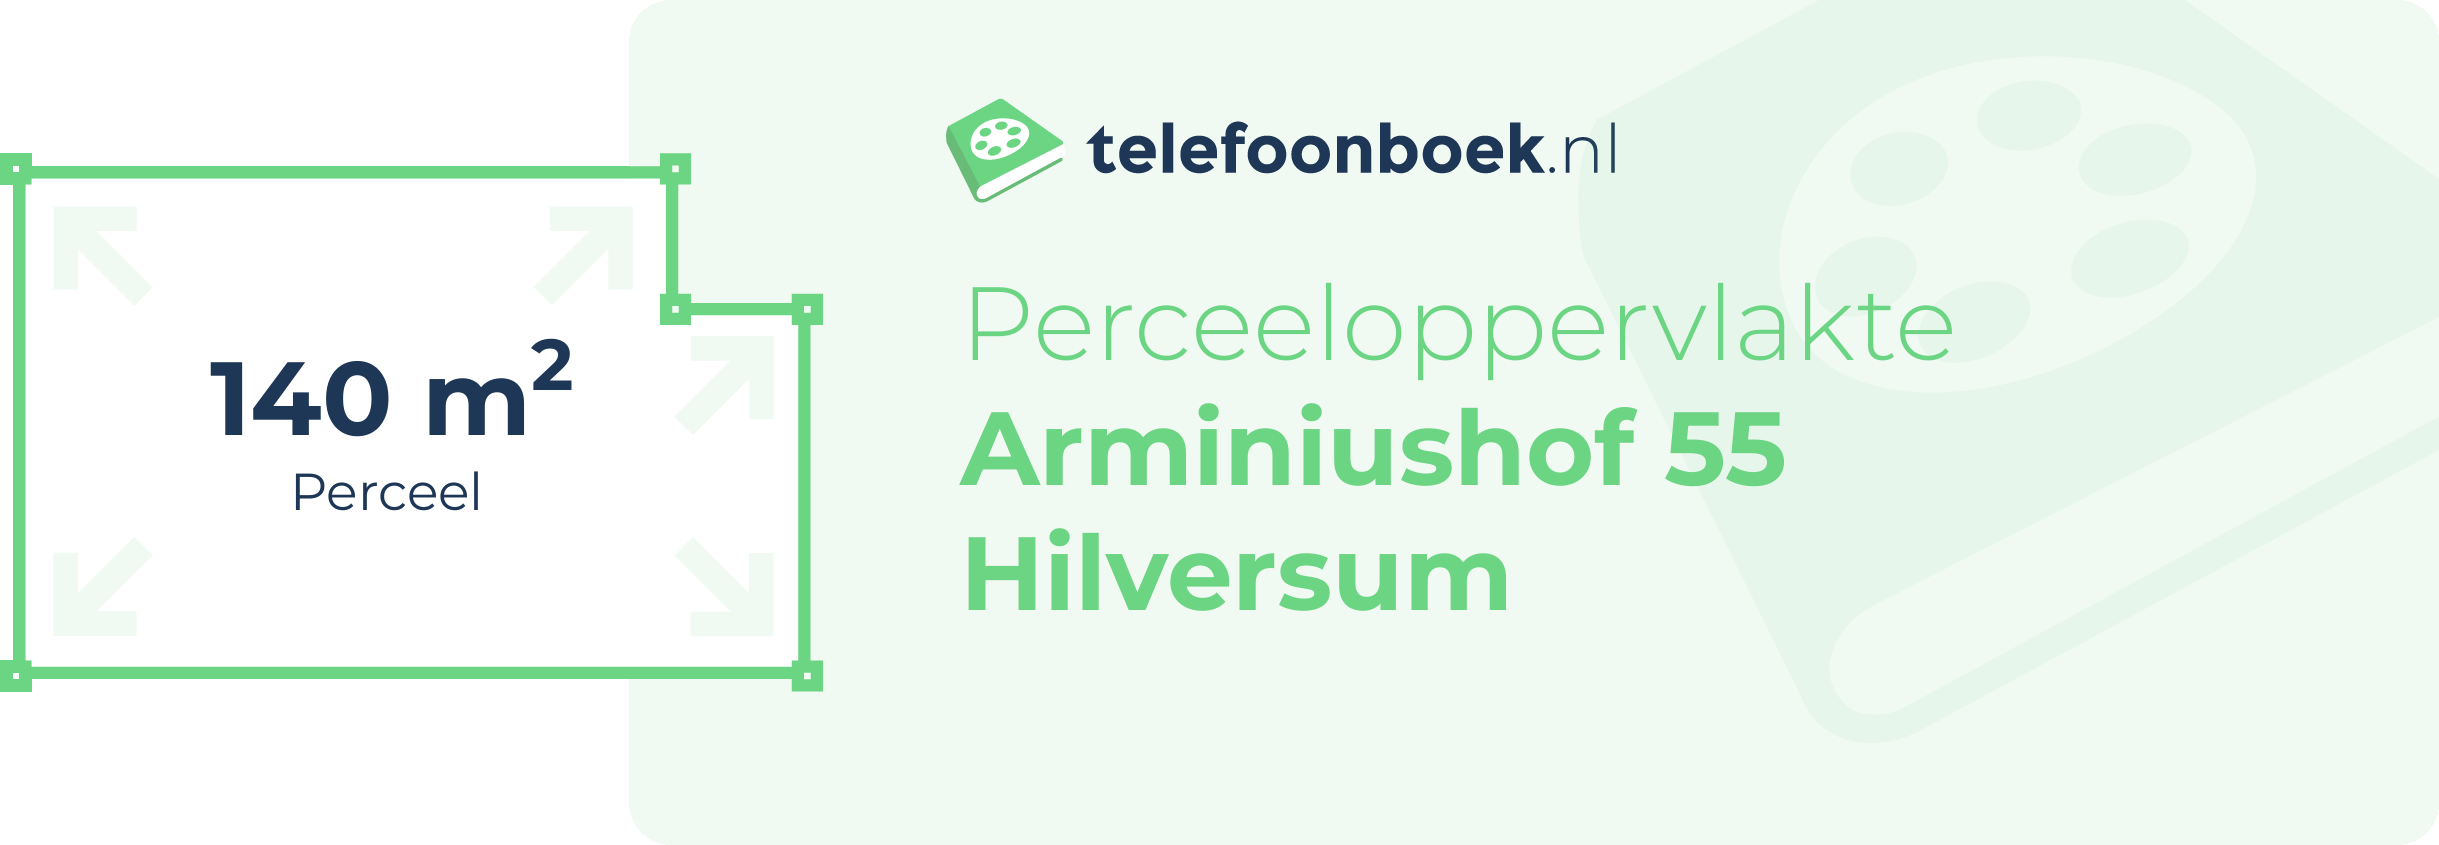 Perceeloppervlakte Arminiushof 55 Hilversum